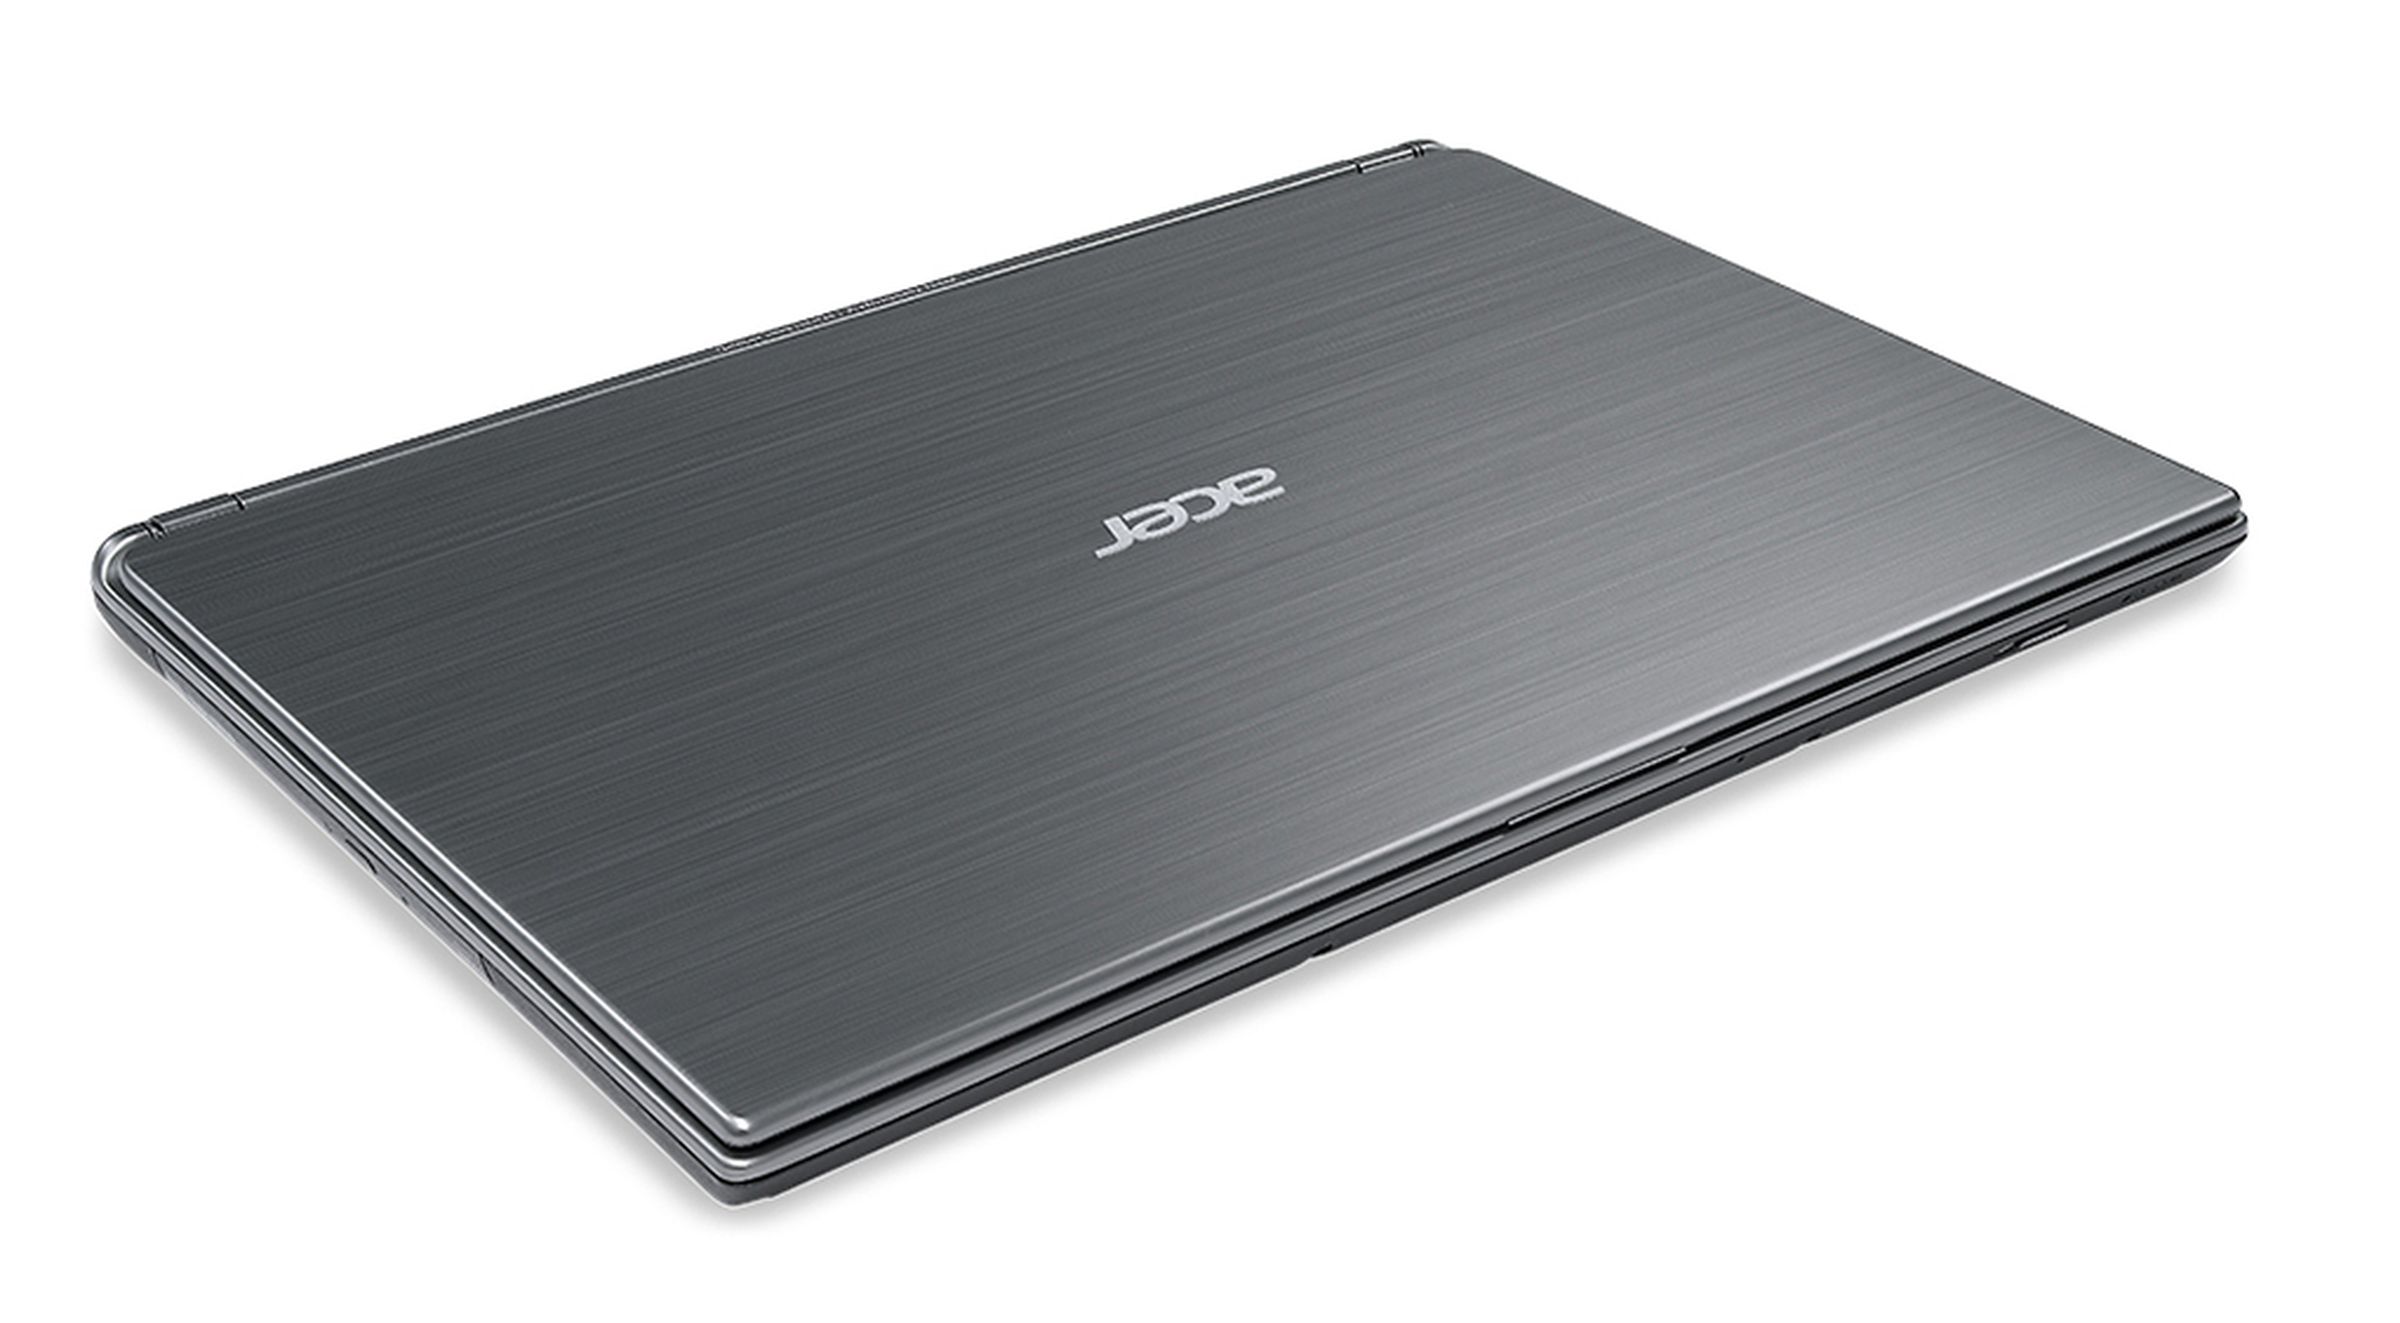 Acer Aspire M5-481PT press pictures